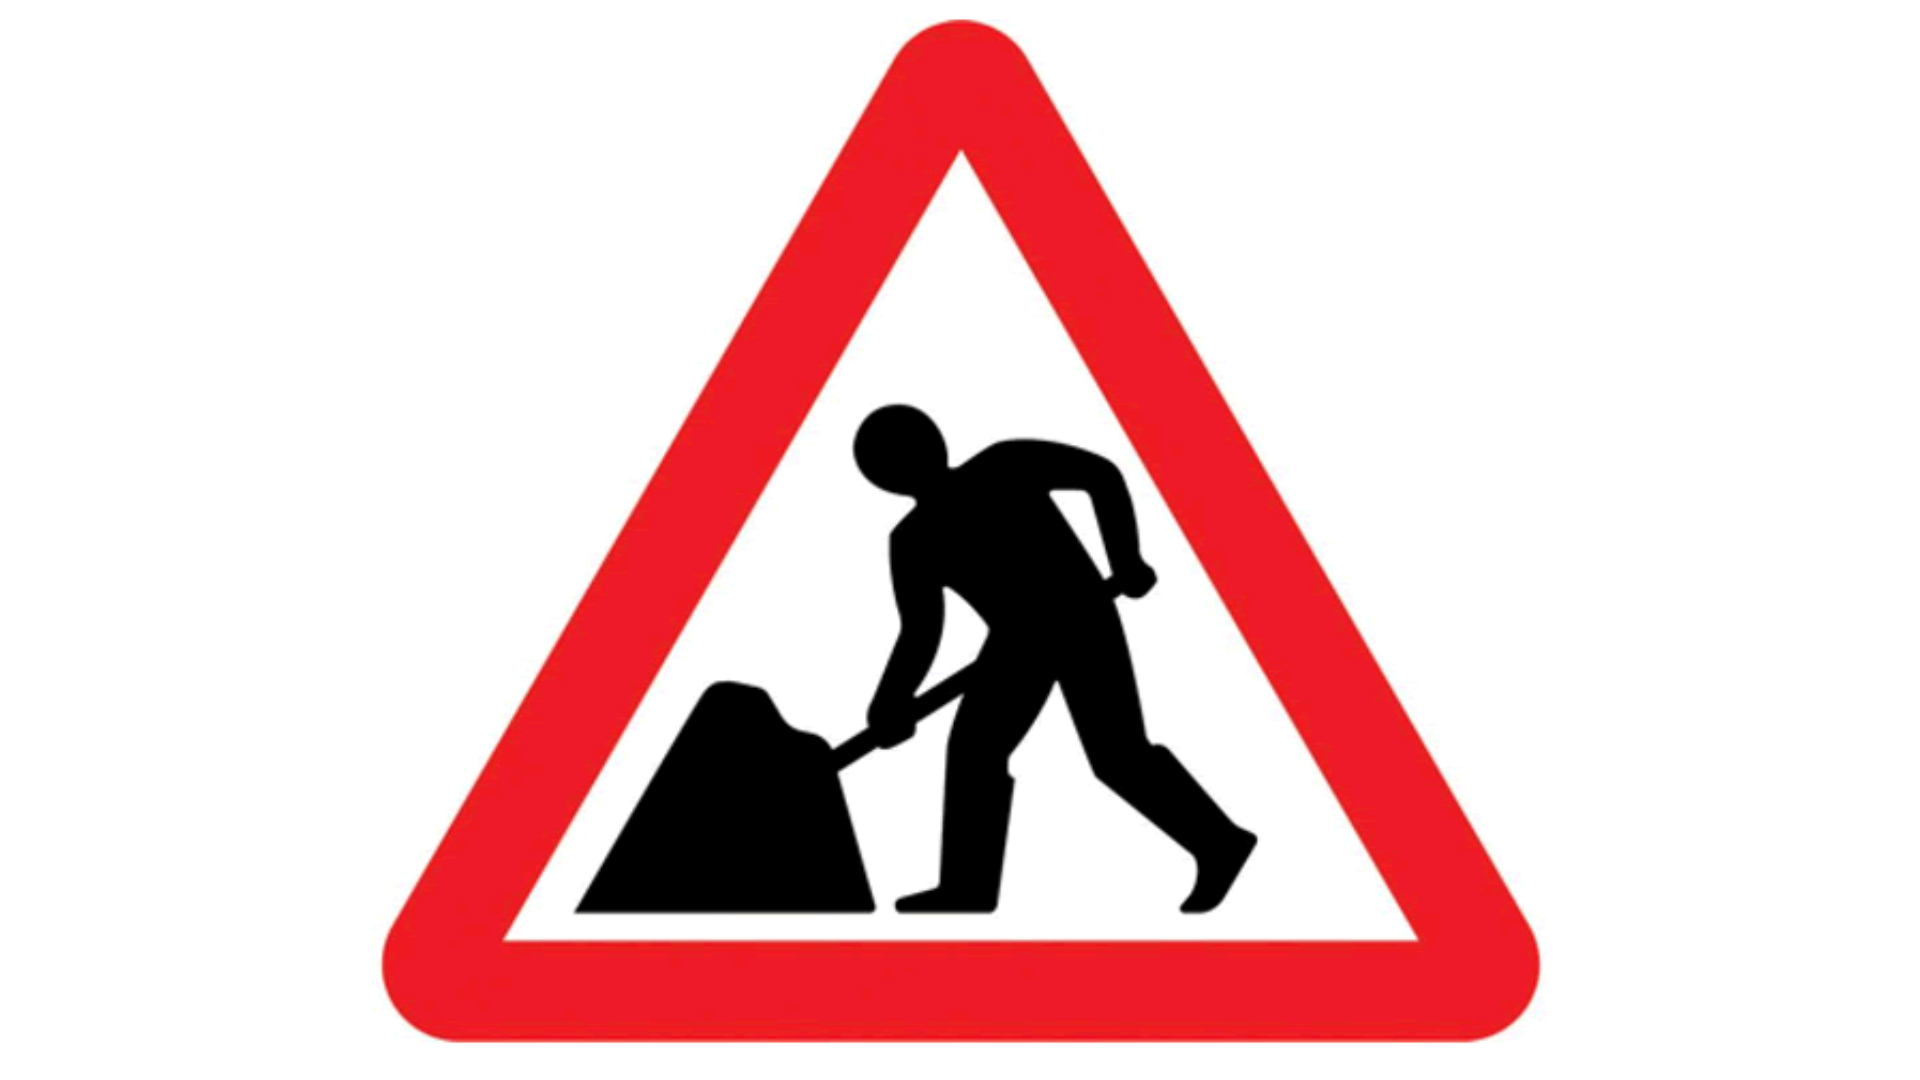 Roadwork sign